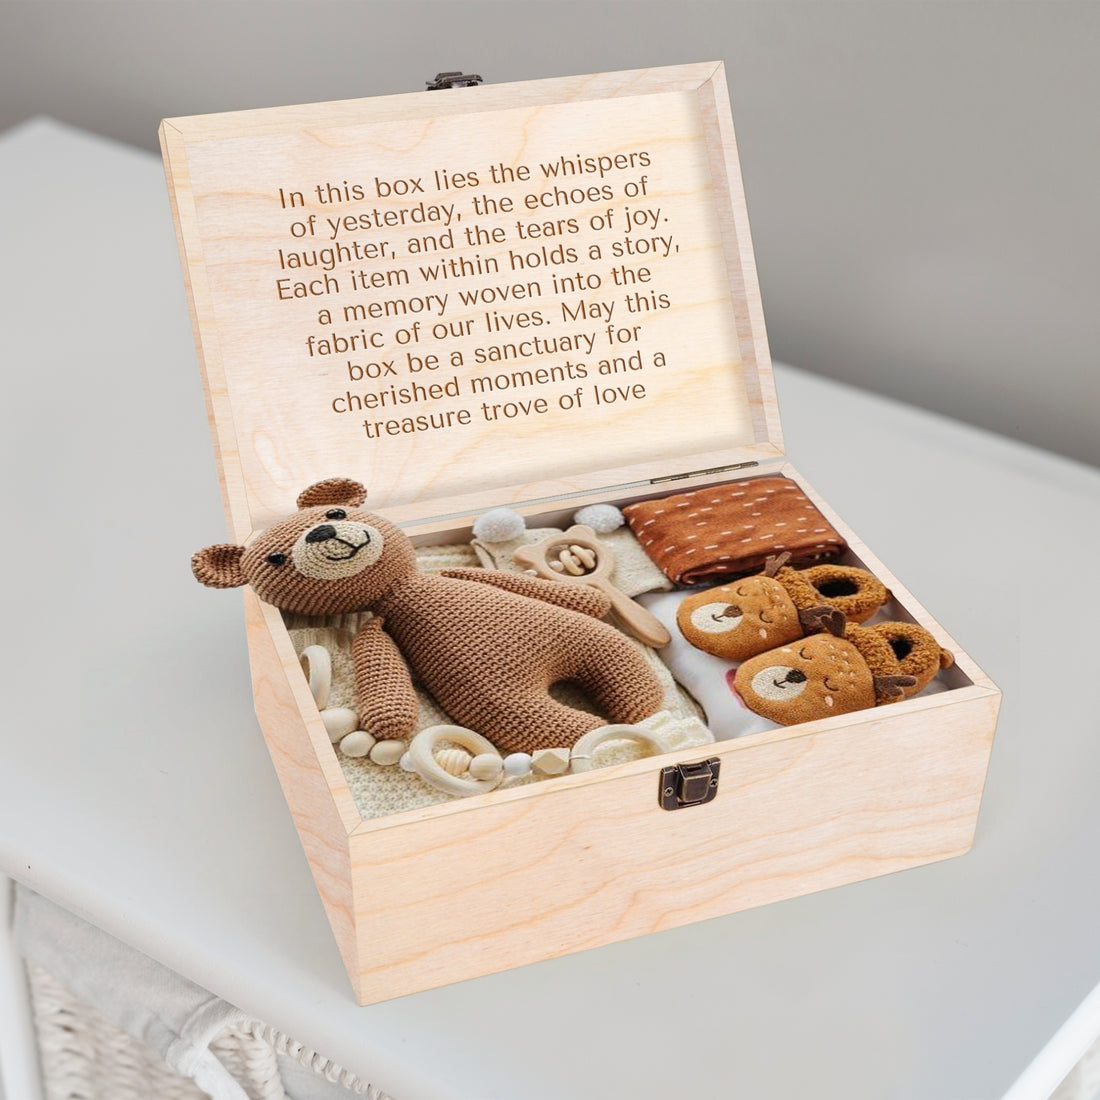 Personalised New Born Baby Wooden Keepsake Box, Custom UV Printed Engraved Pine Memory Boxes, Treasure Storage, Nursery, First Birthday Gift